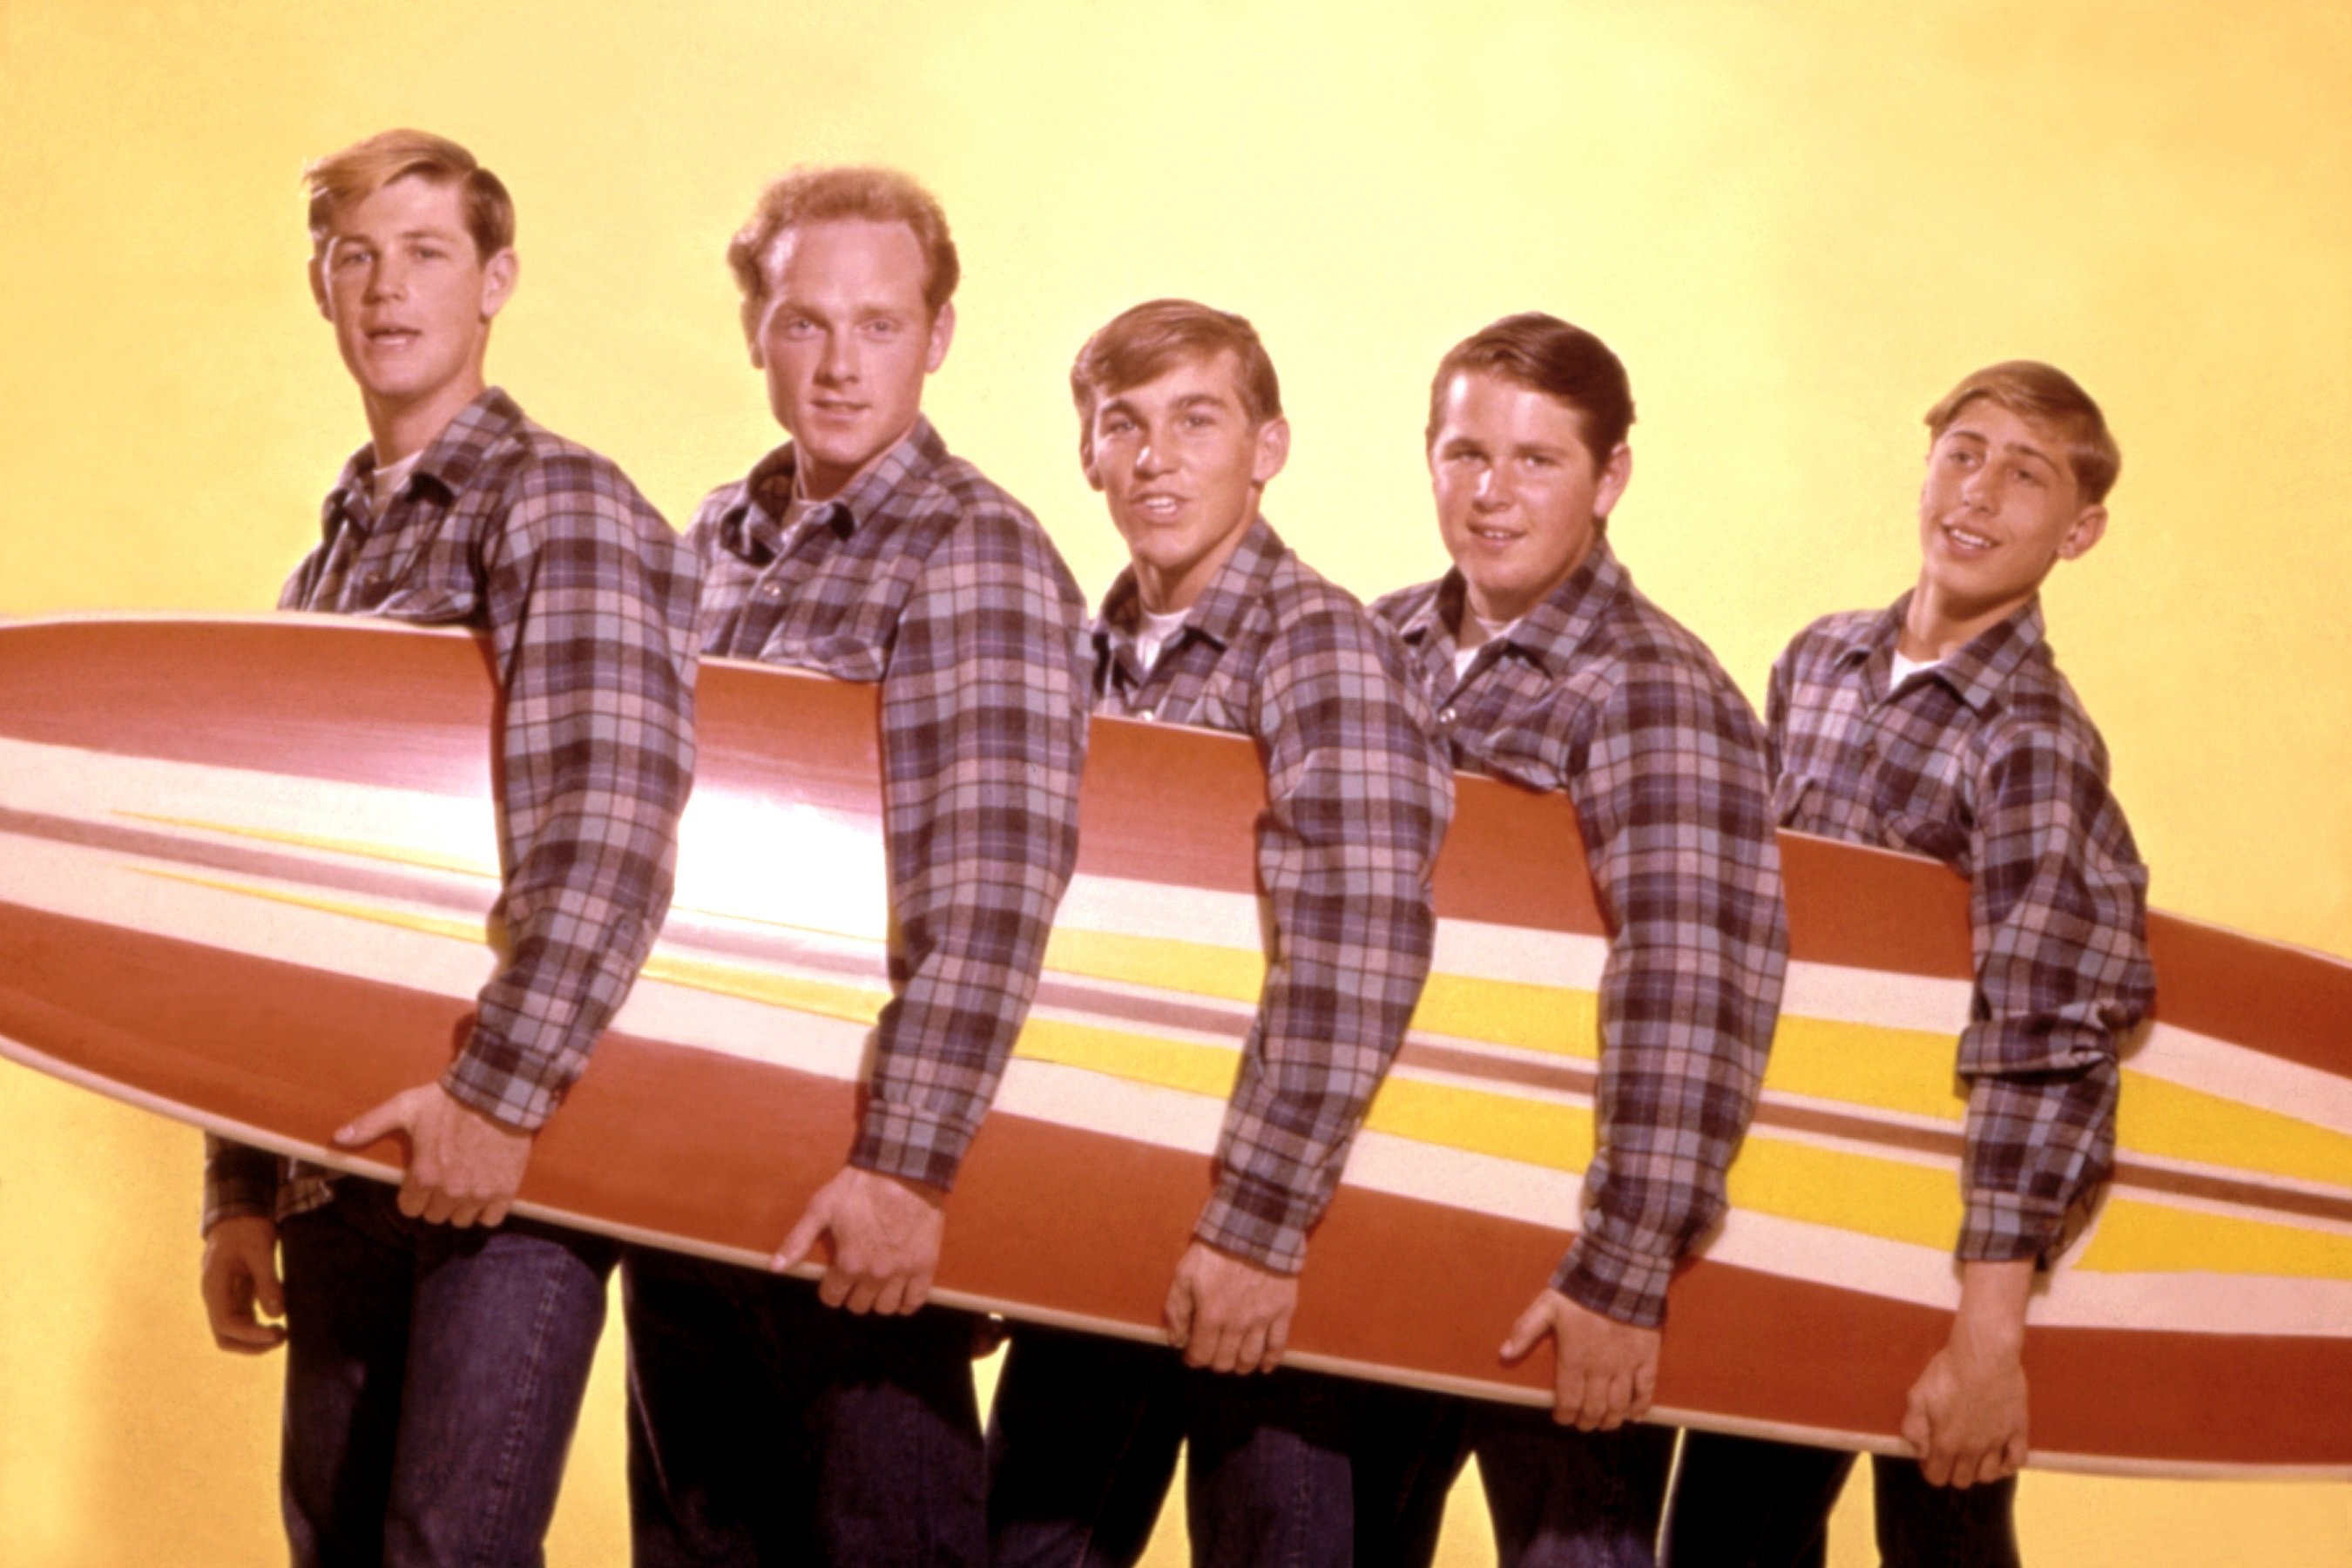 The Beach Boys' Brian Wilson, Mike Love, Dennis Wilson, Carl Wilson, and David Marks with a surf board